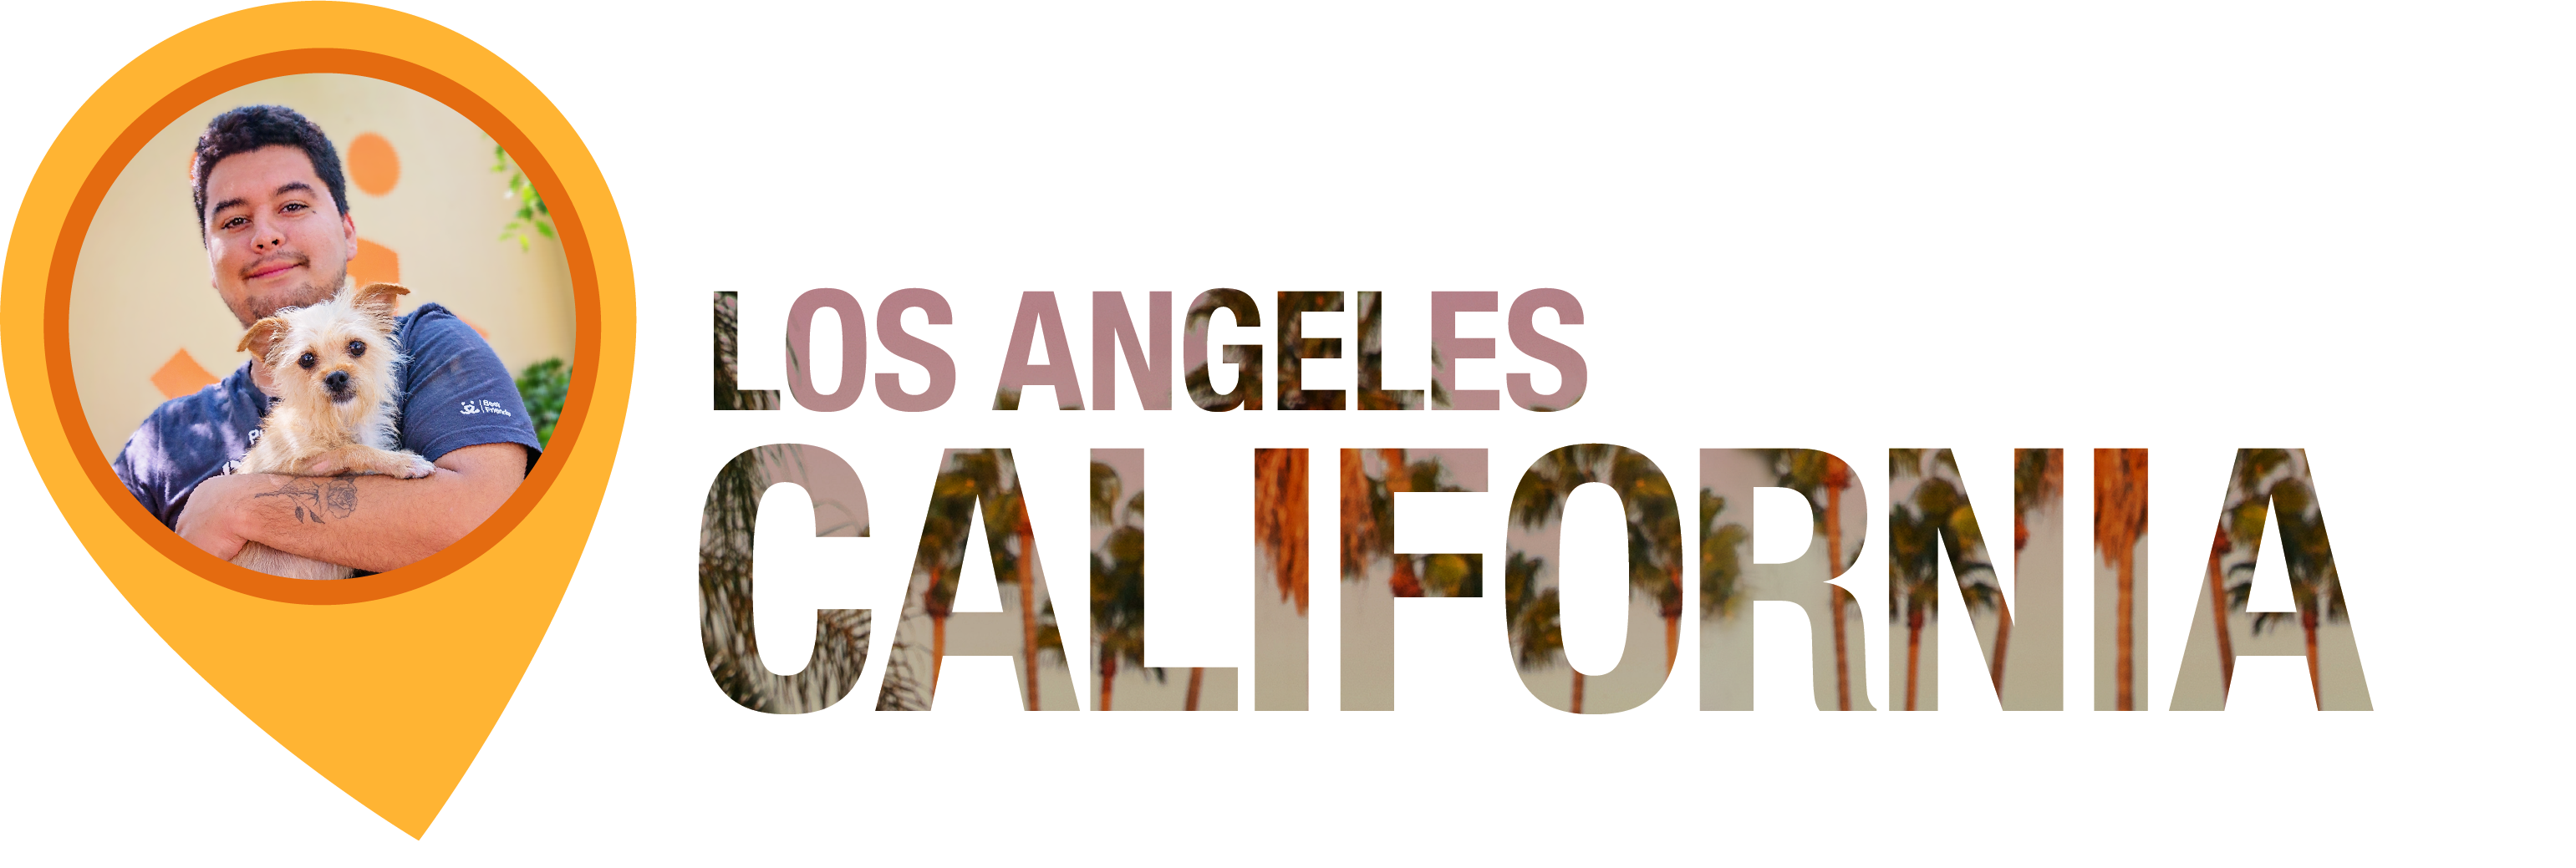 Los Angeles Graphic